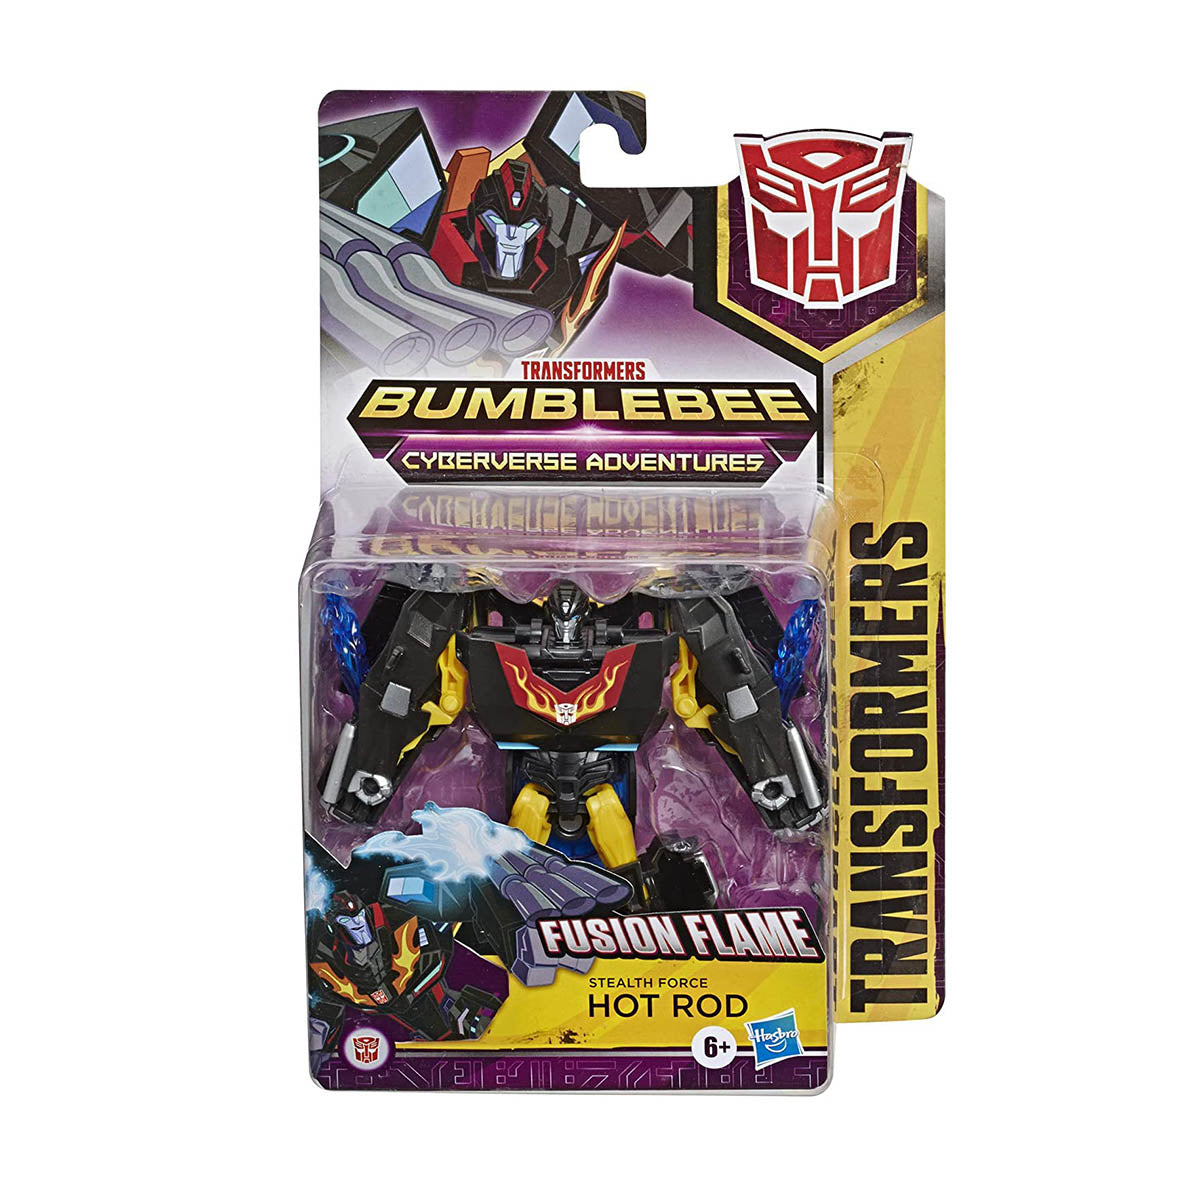 Transformers Bumblebee Cyberverse Adventures (Styles Vary)